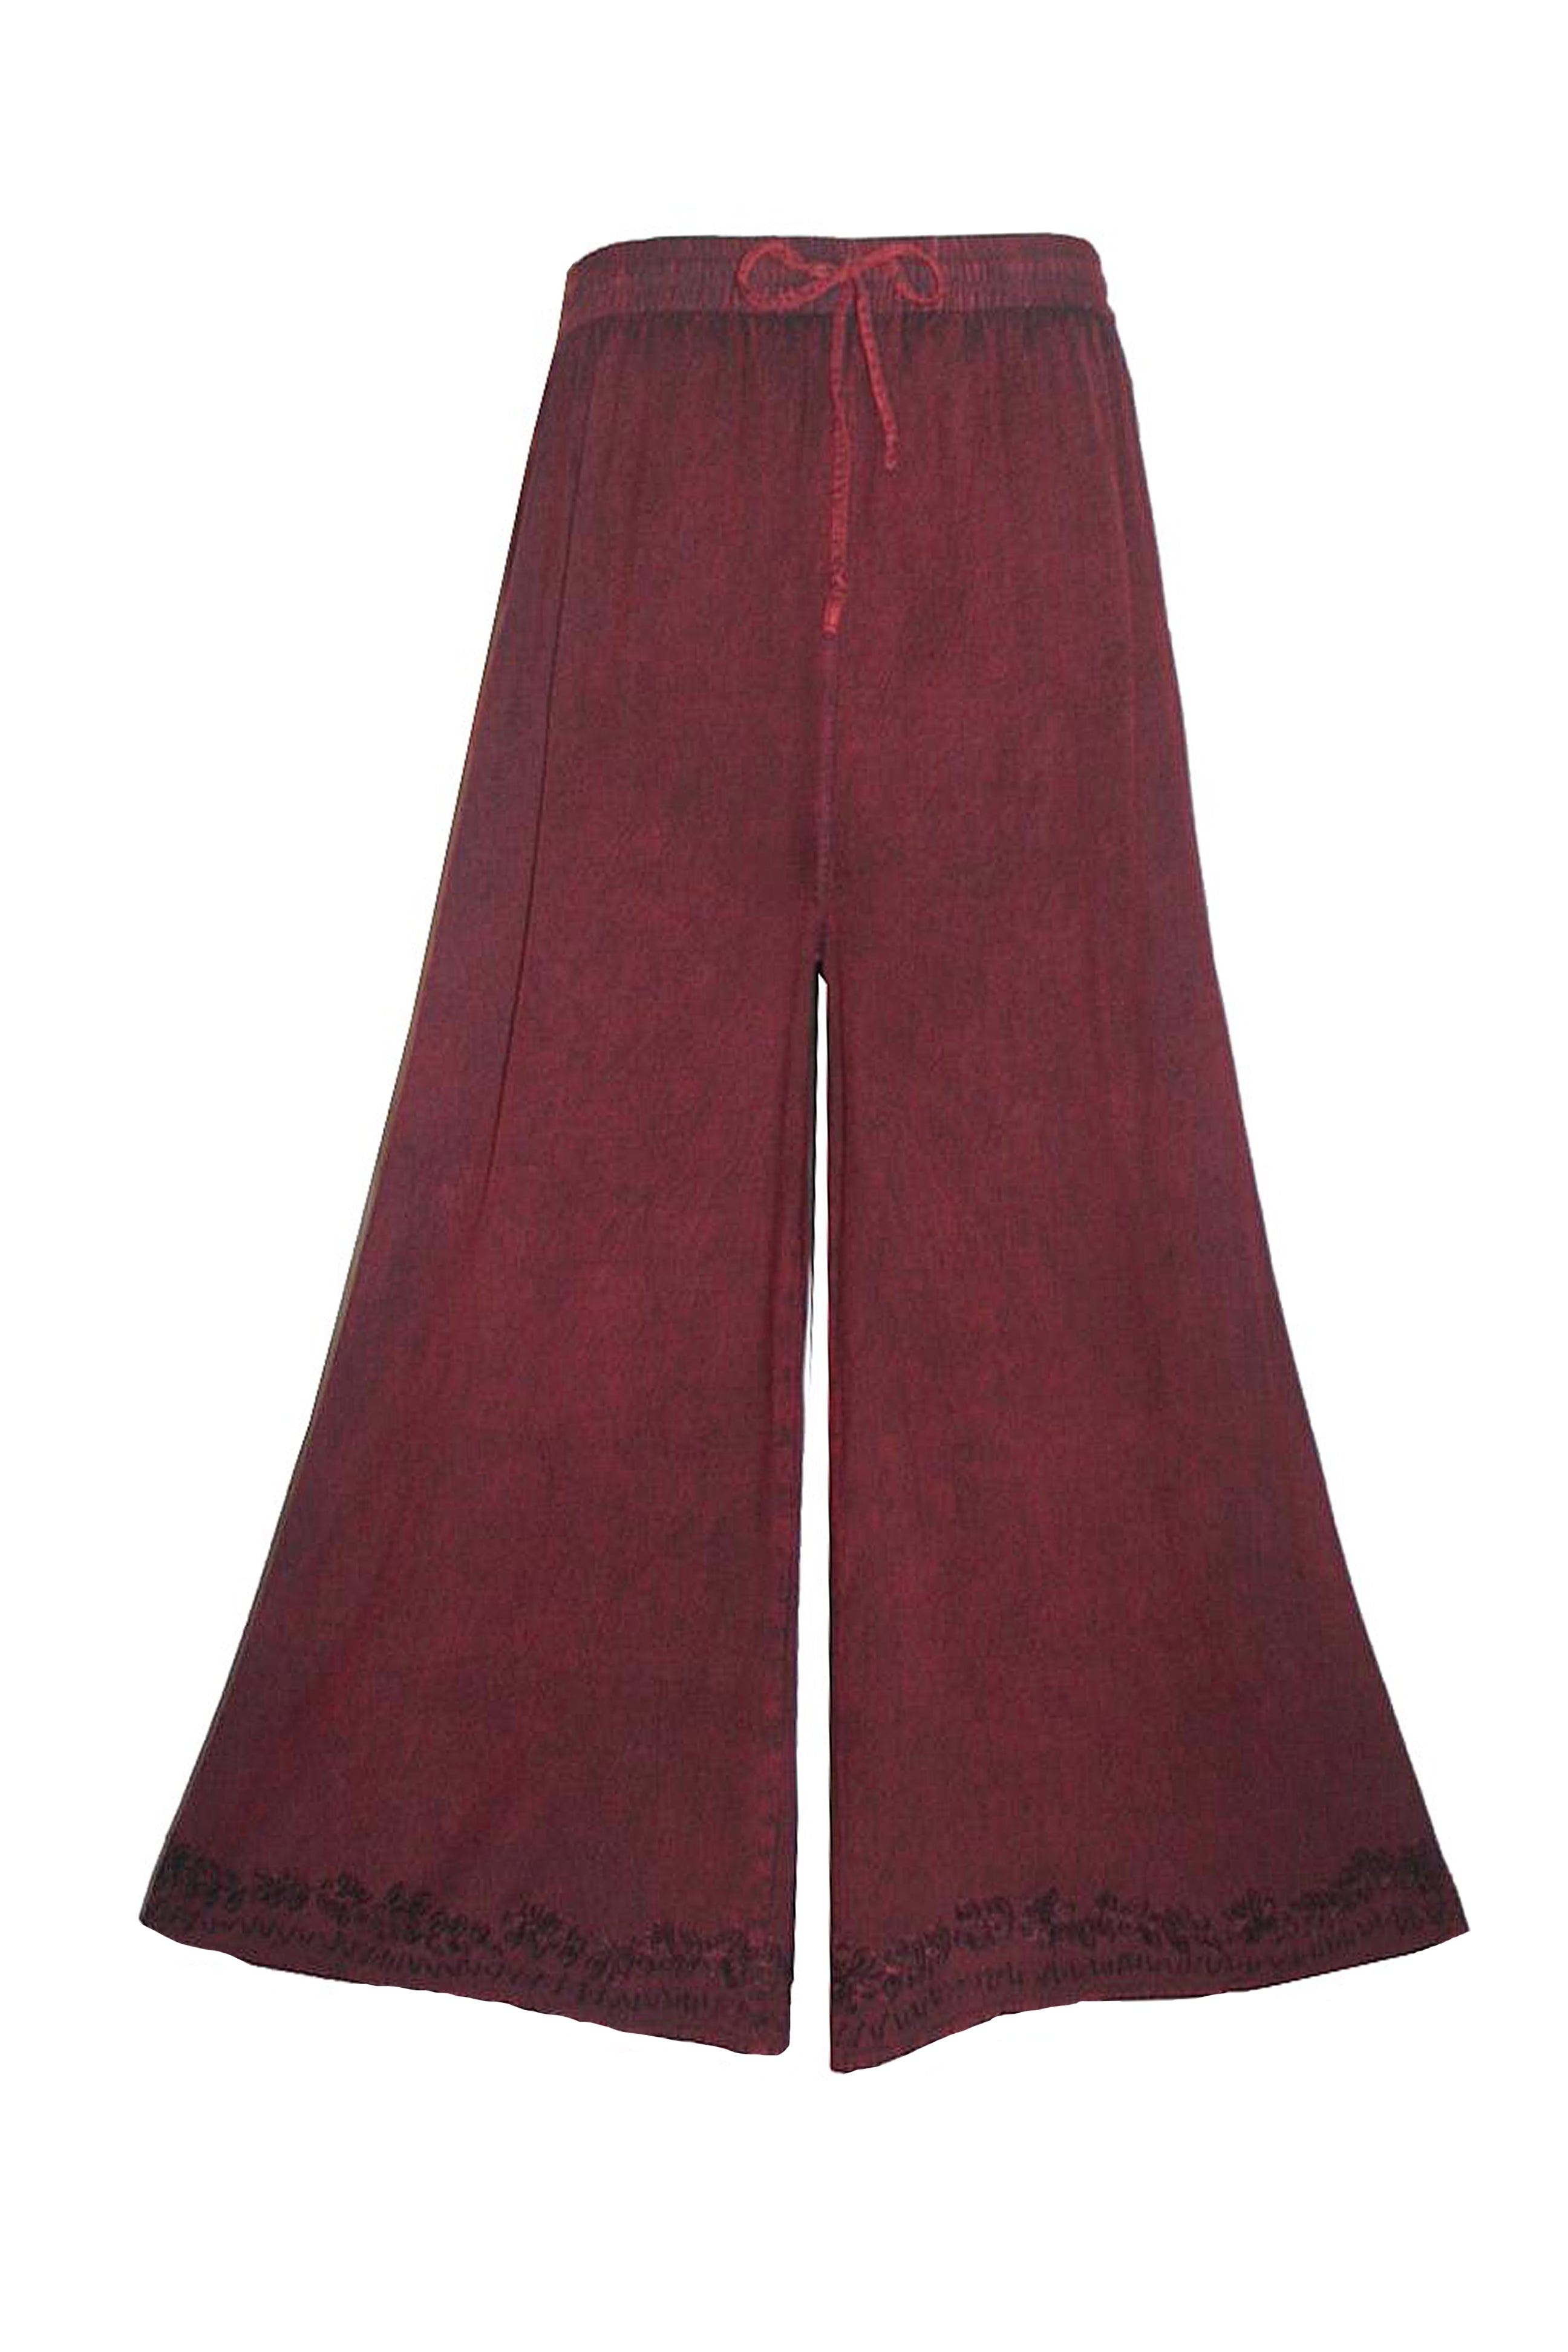 Shipibo Print Crochet Yoga Pants with Skirt Waist – Mystic Closets